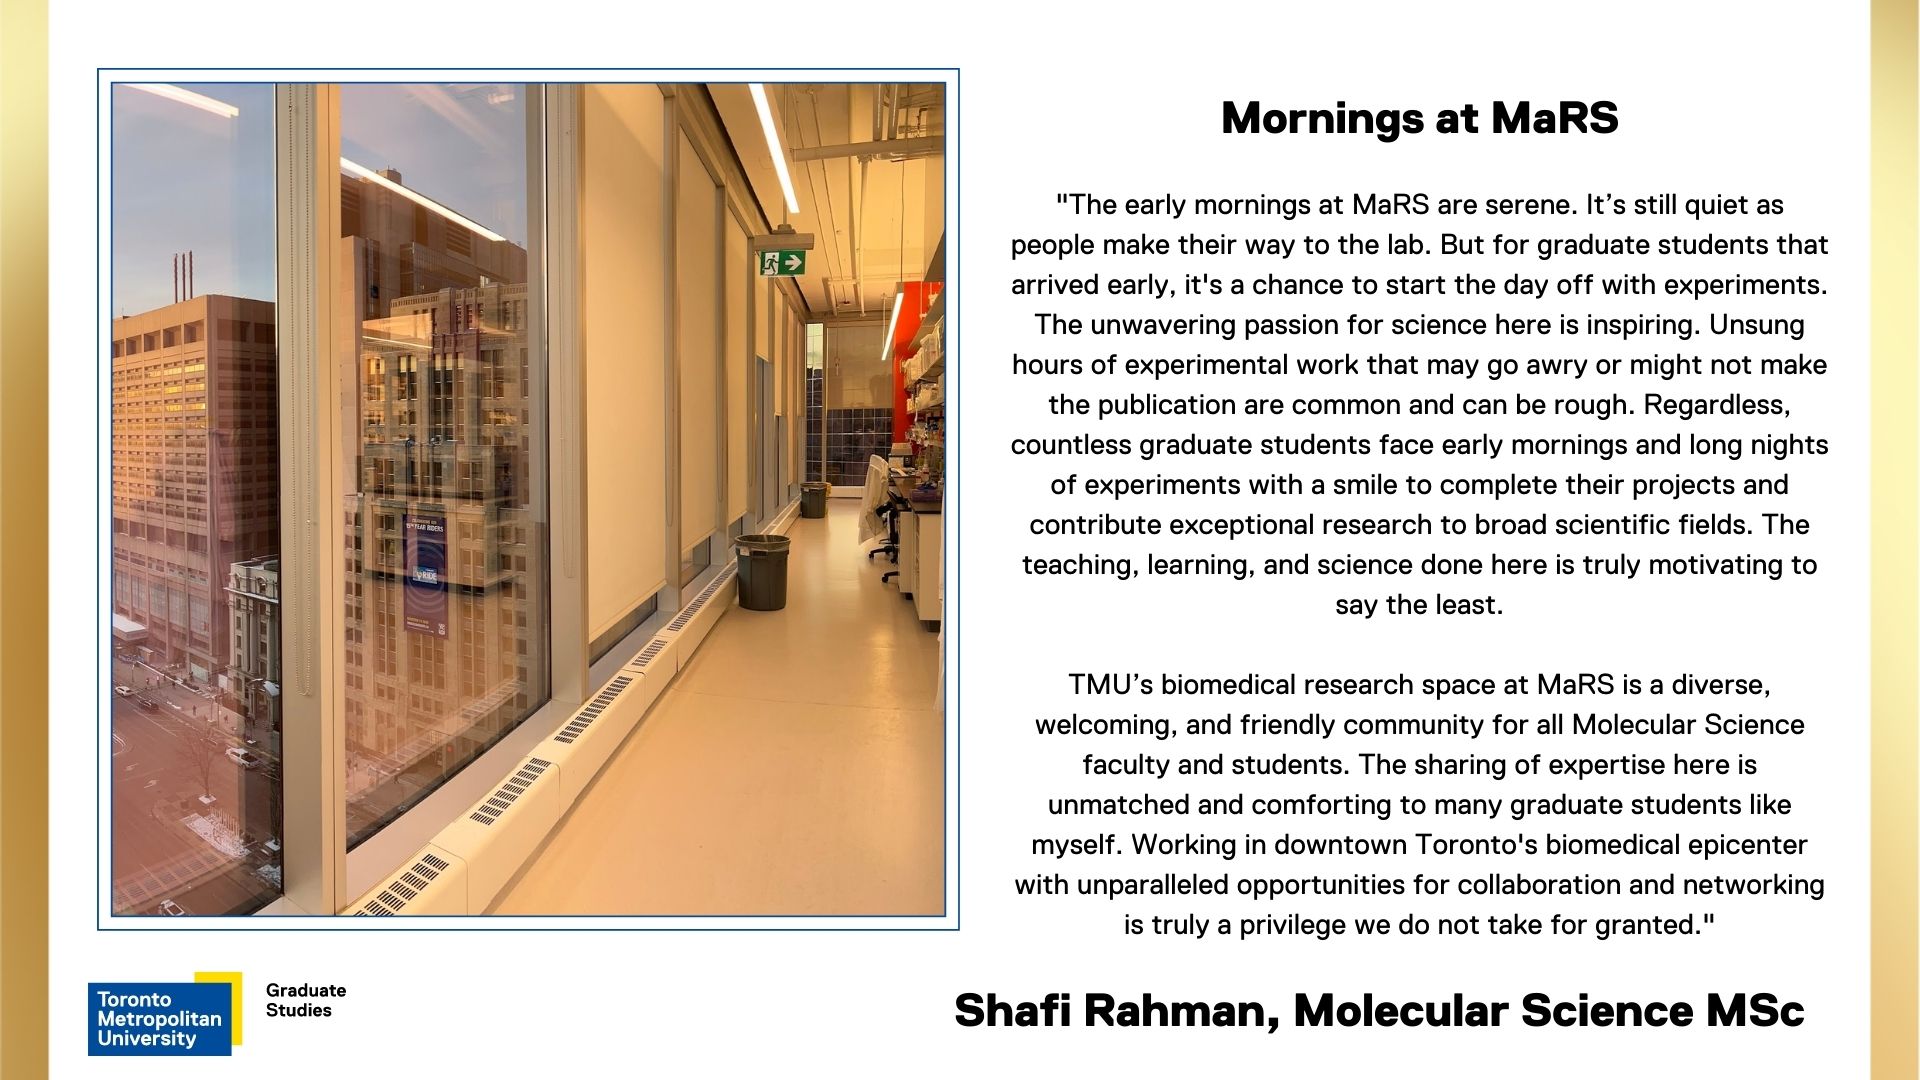 Shafi-Rahman. Lab in MaRS building.